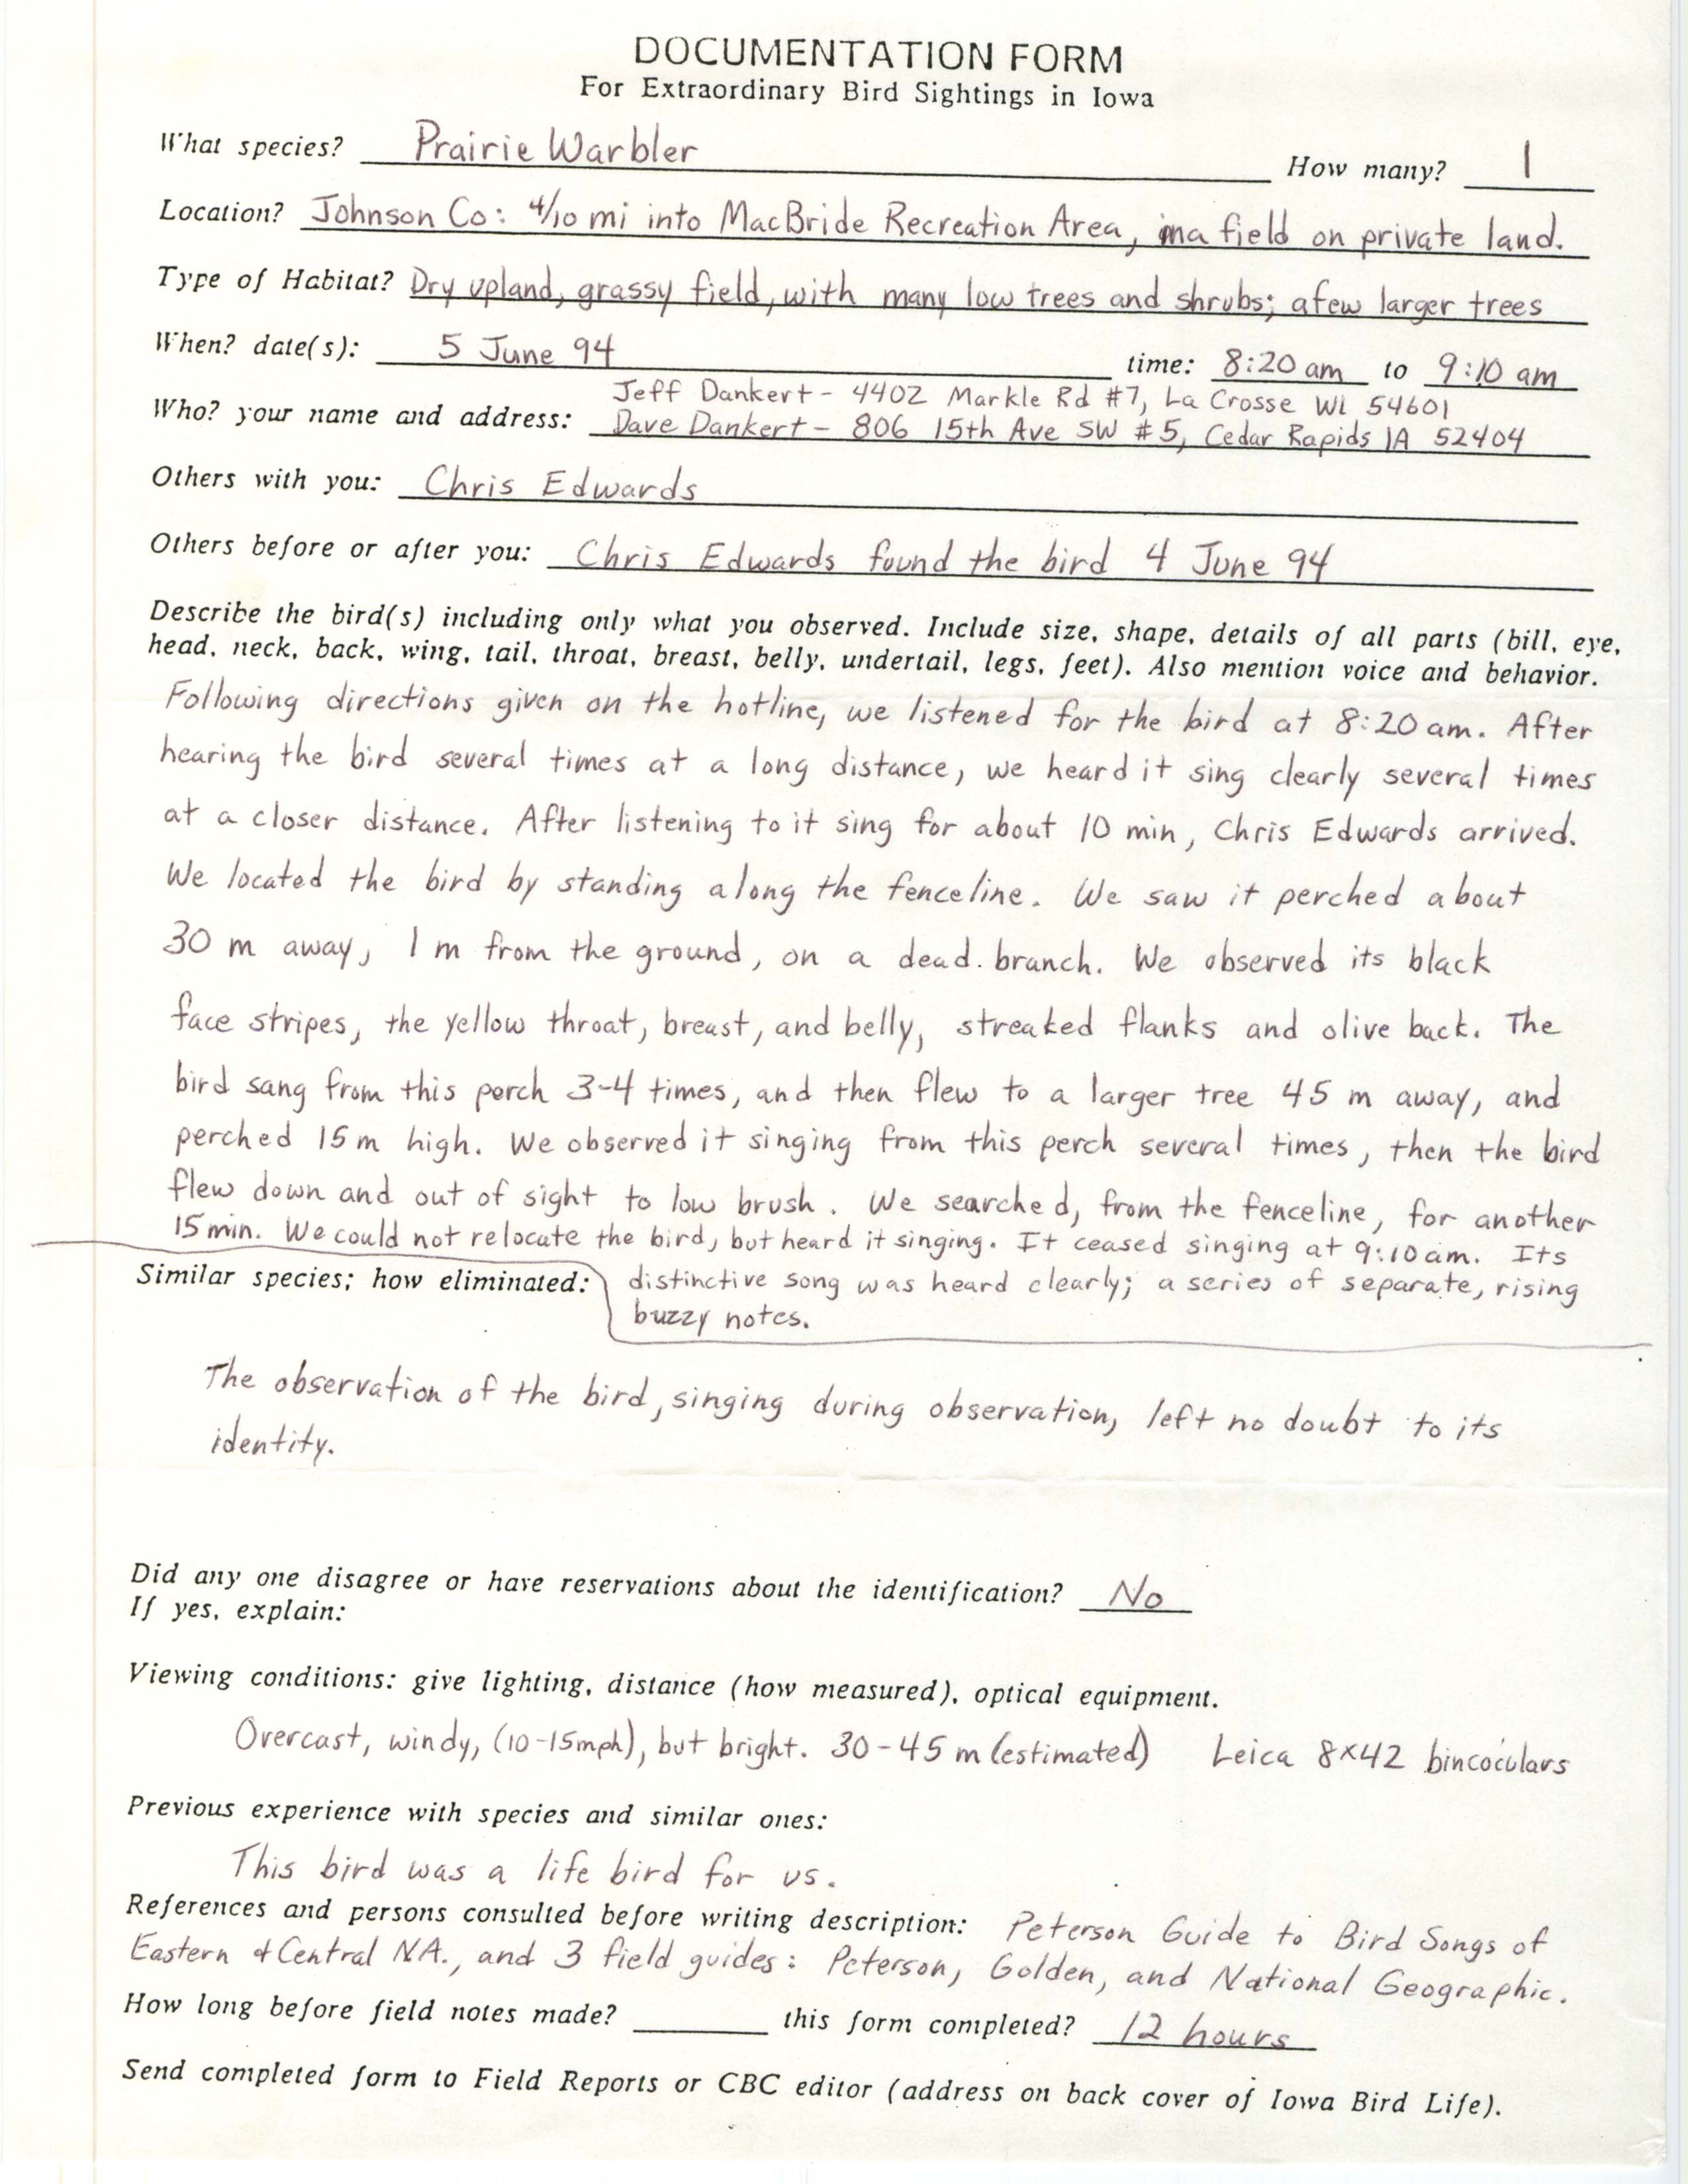 Rare bird documentation form for Prairie Warbler at MacBride Recreation Area, 1994